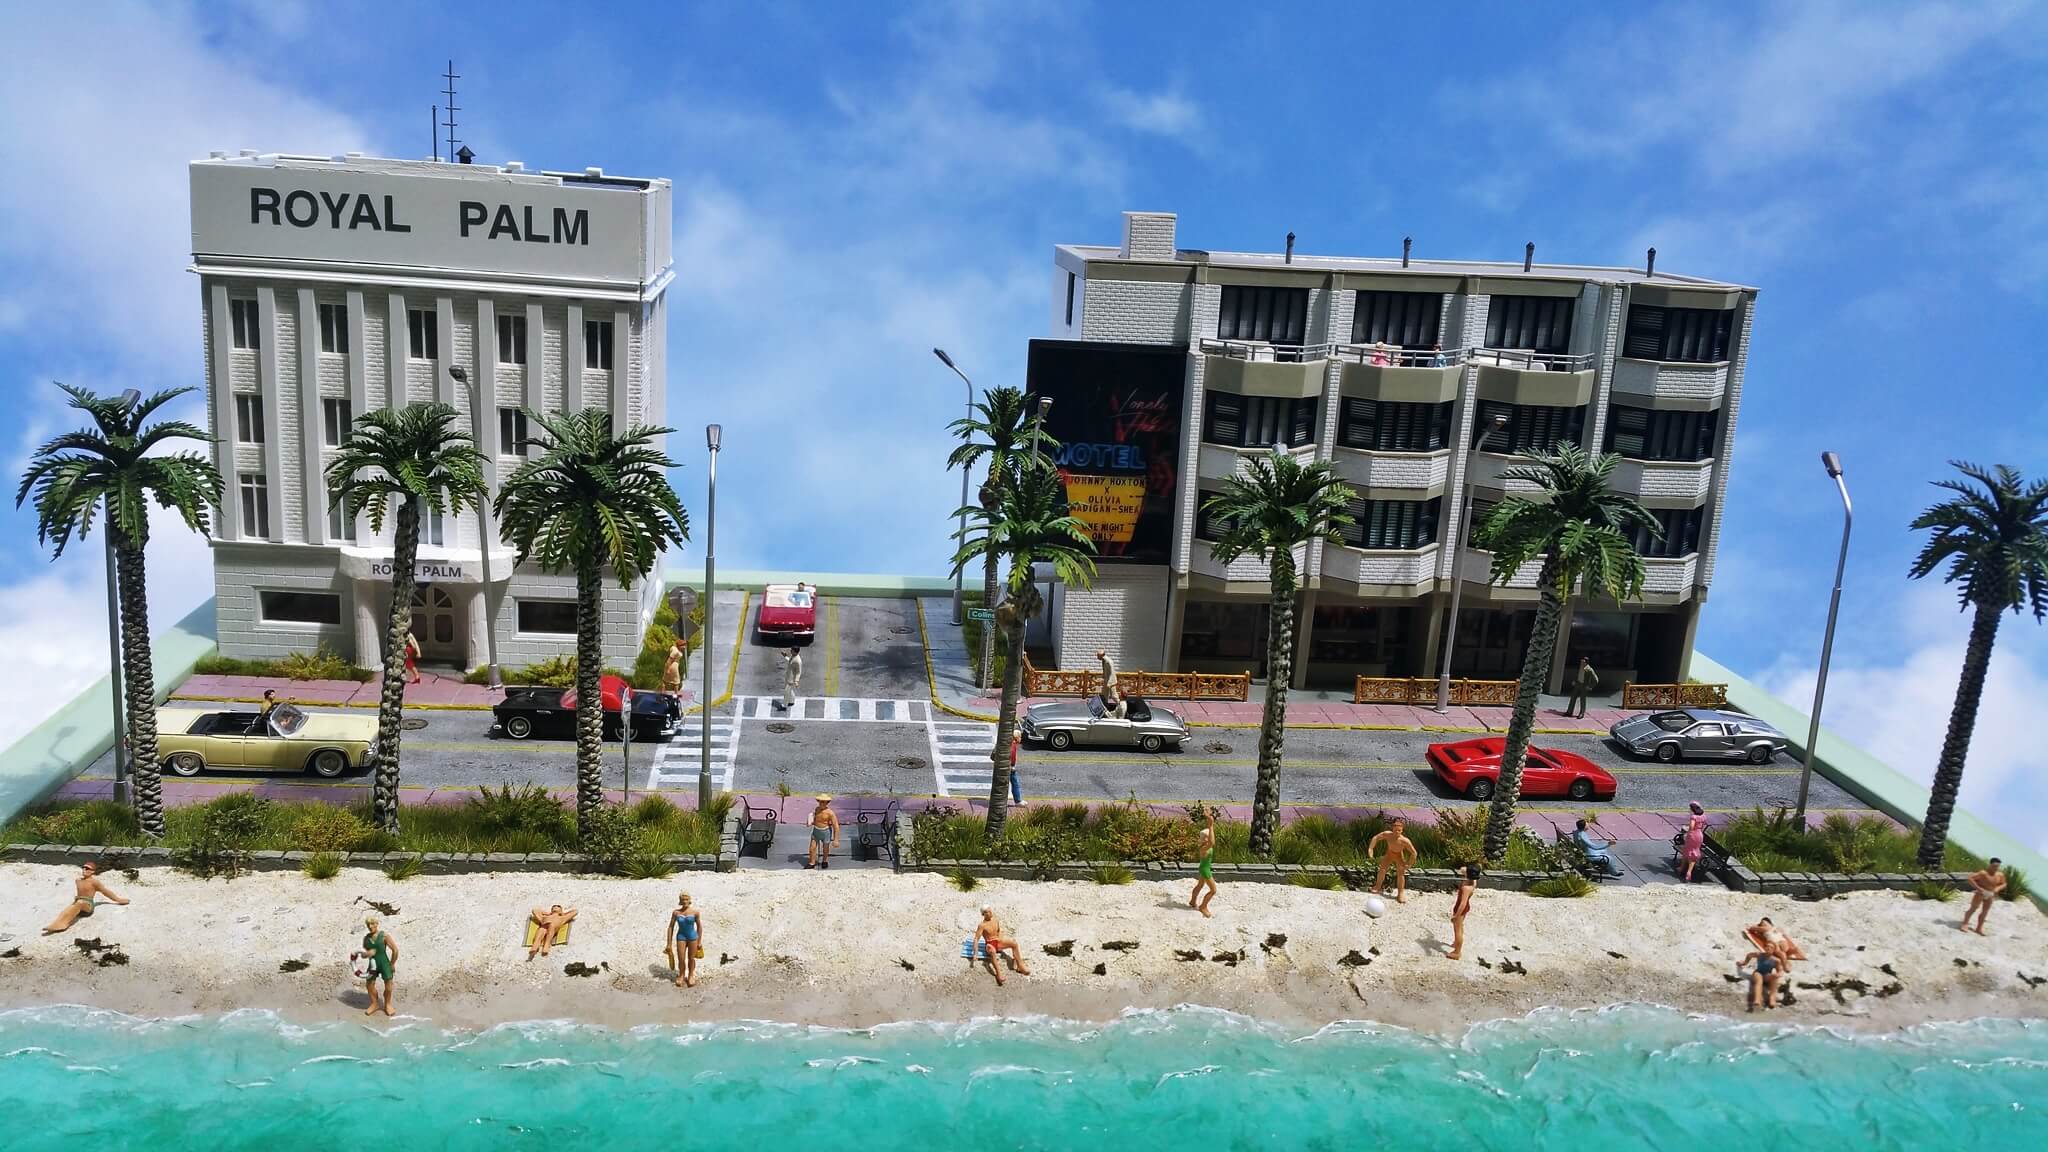 Miniature model of classic Miami street